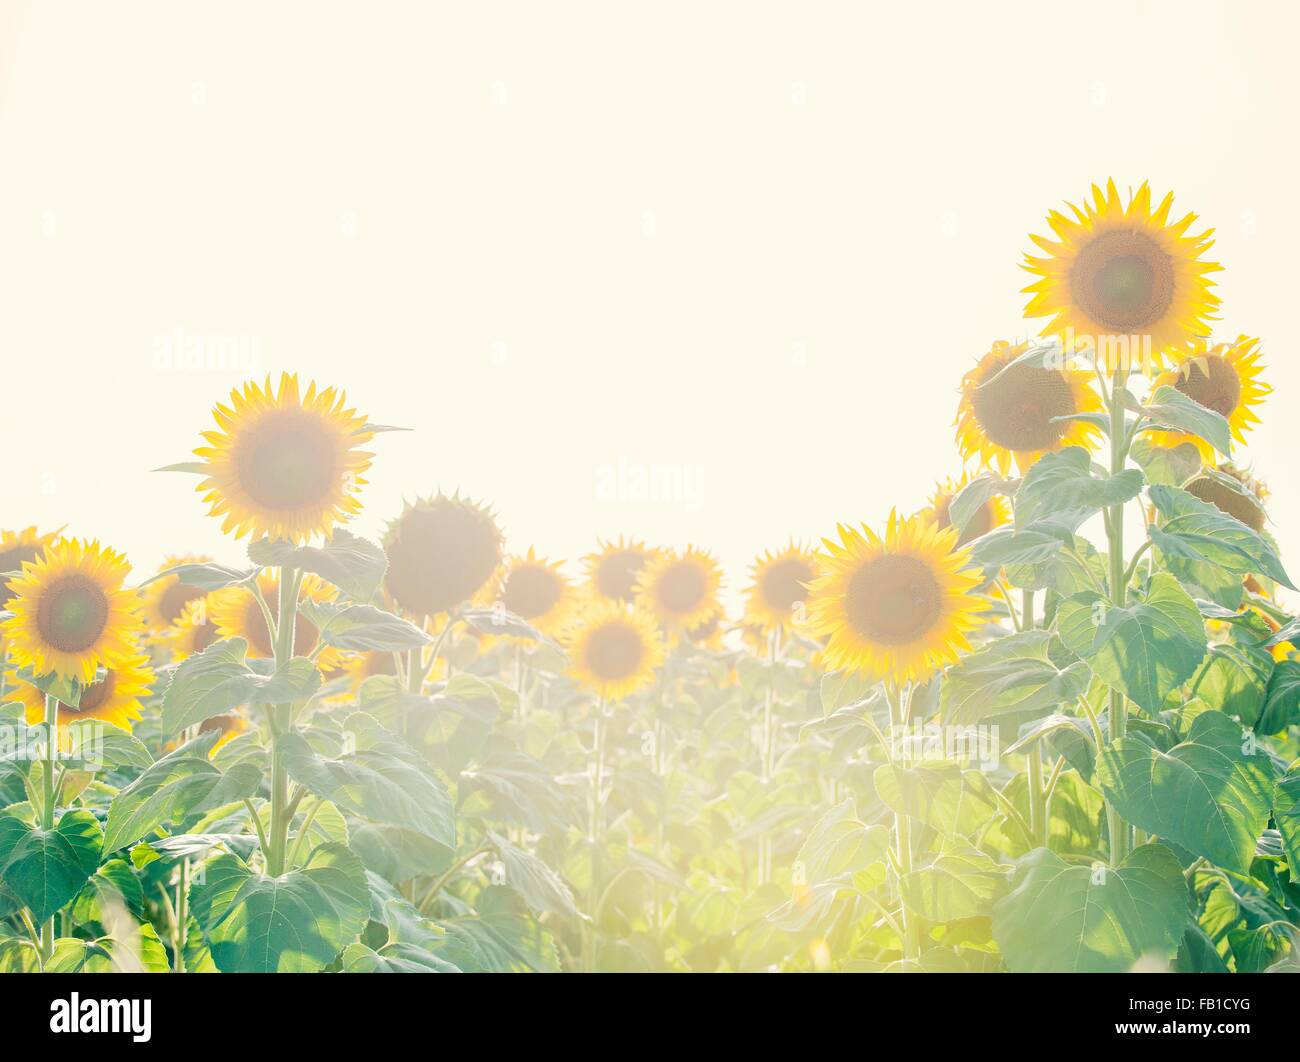 Sunlit sunflower field Stock Photo